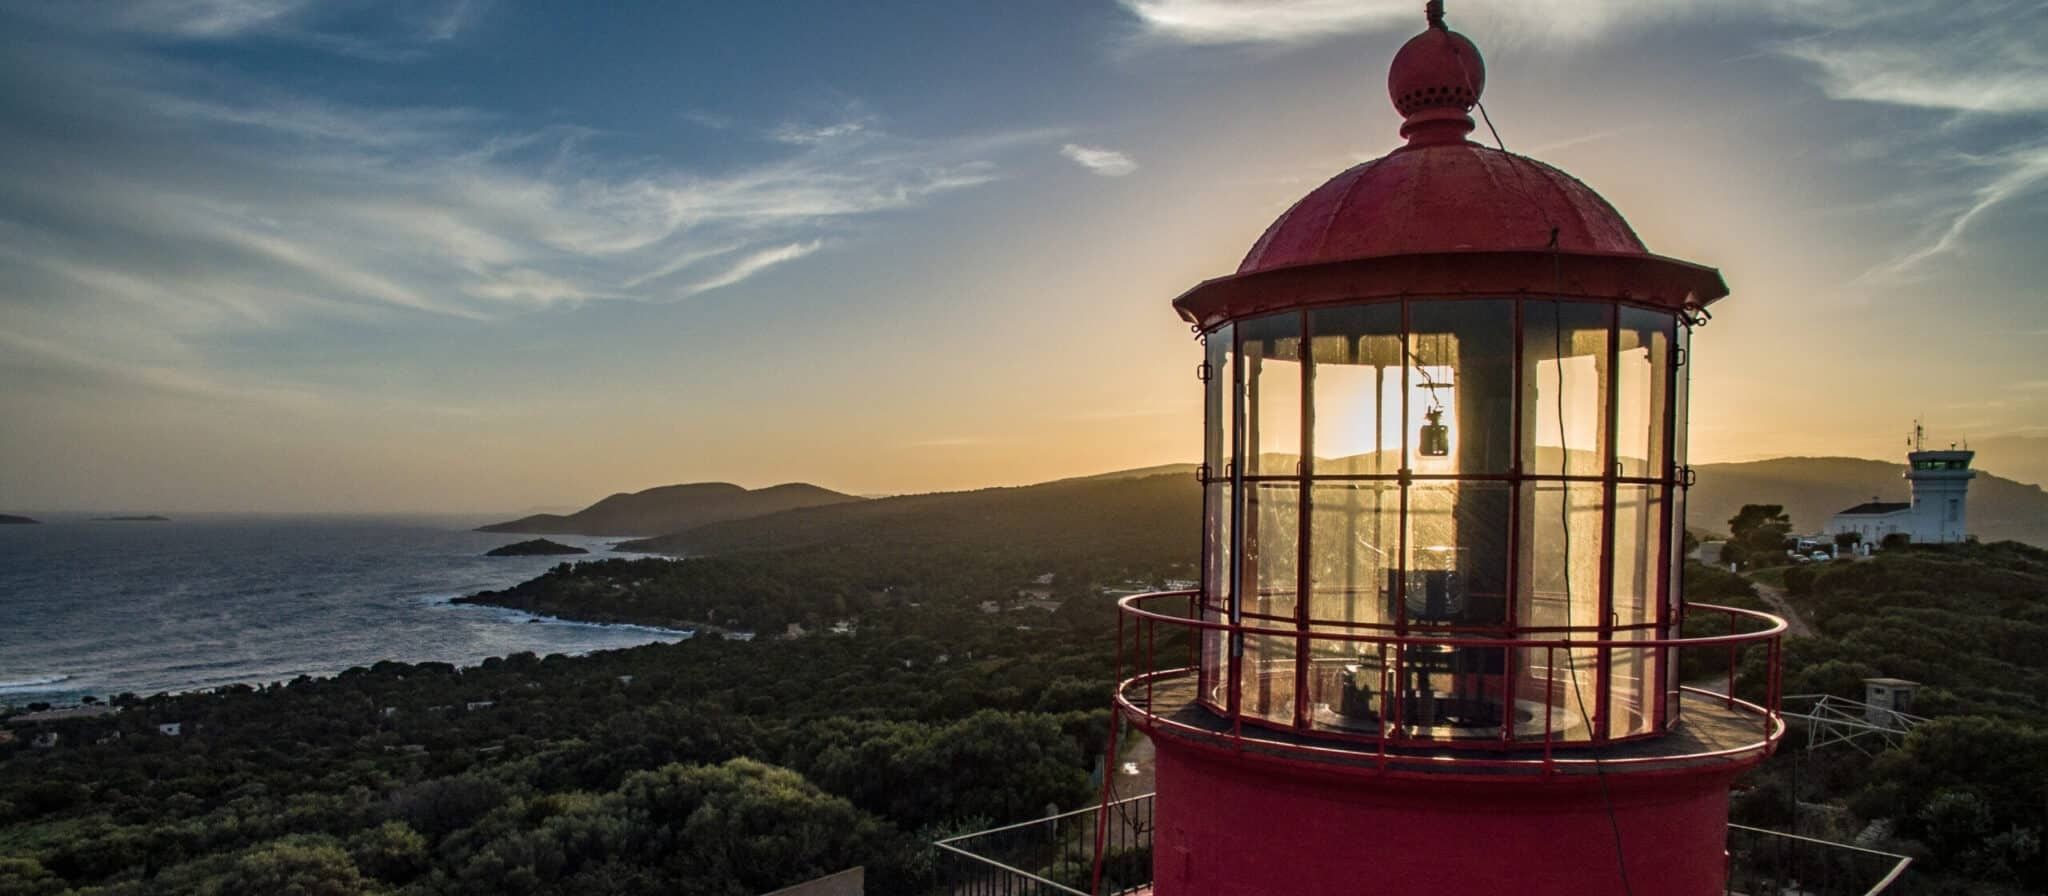 Le phare de la Chiappa, en Corse.